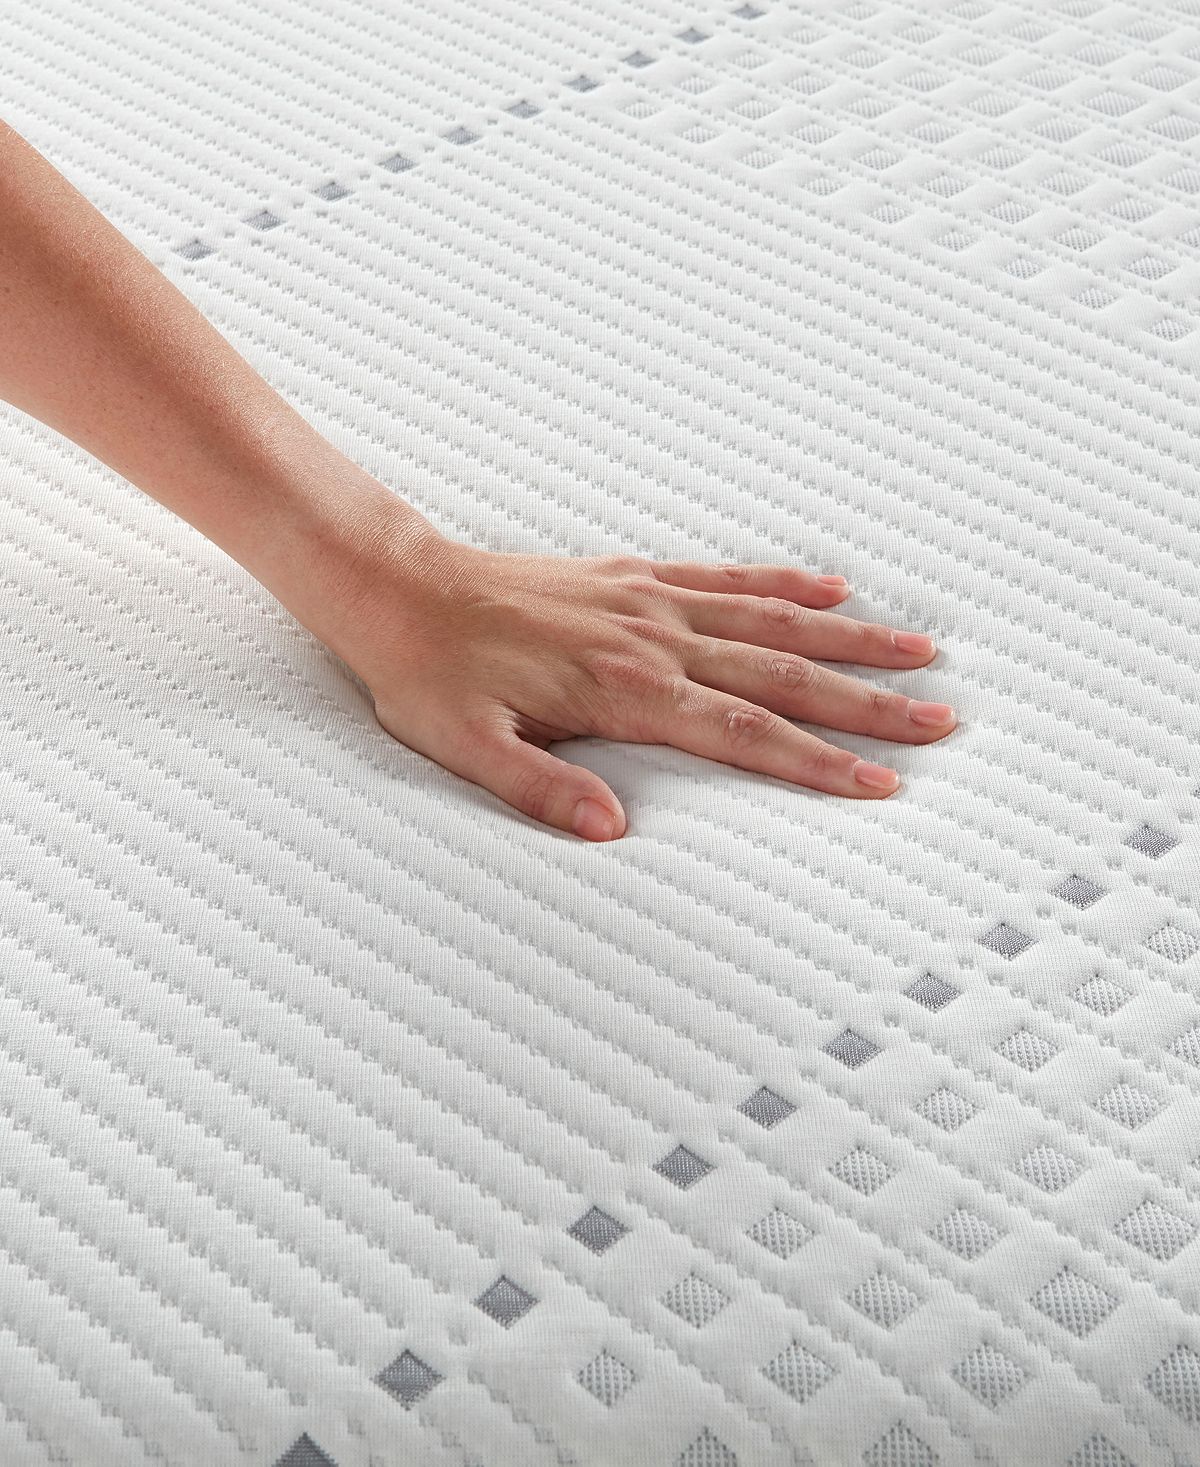 Hand pressing on the Beautyrest Hybrid BRX1000-IP Plush mattress to show firmness